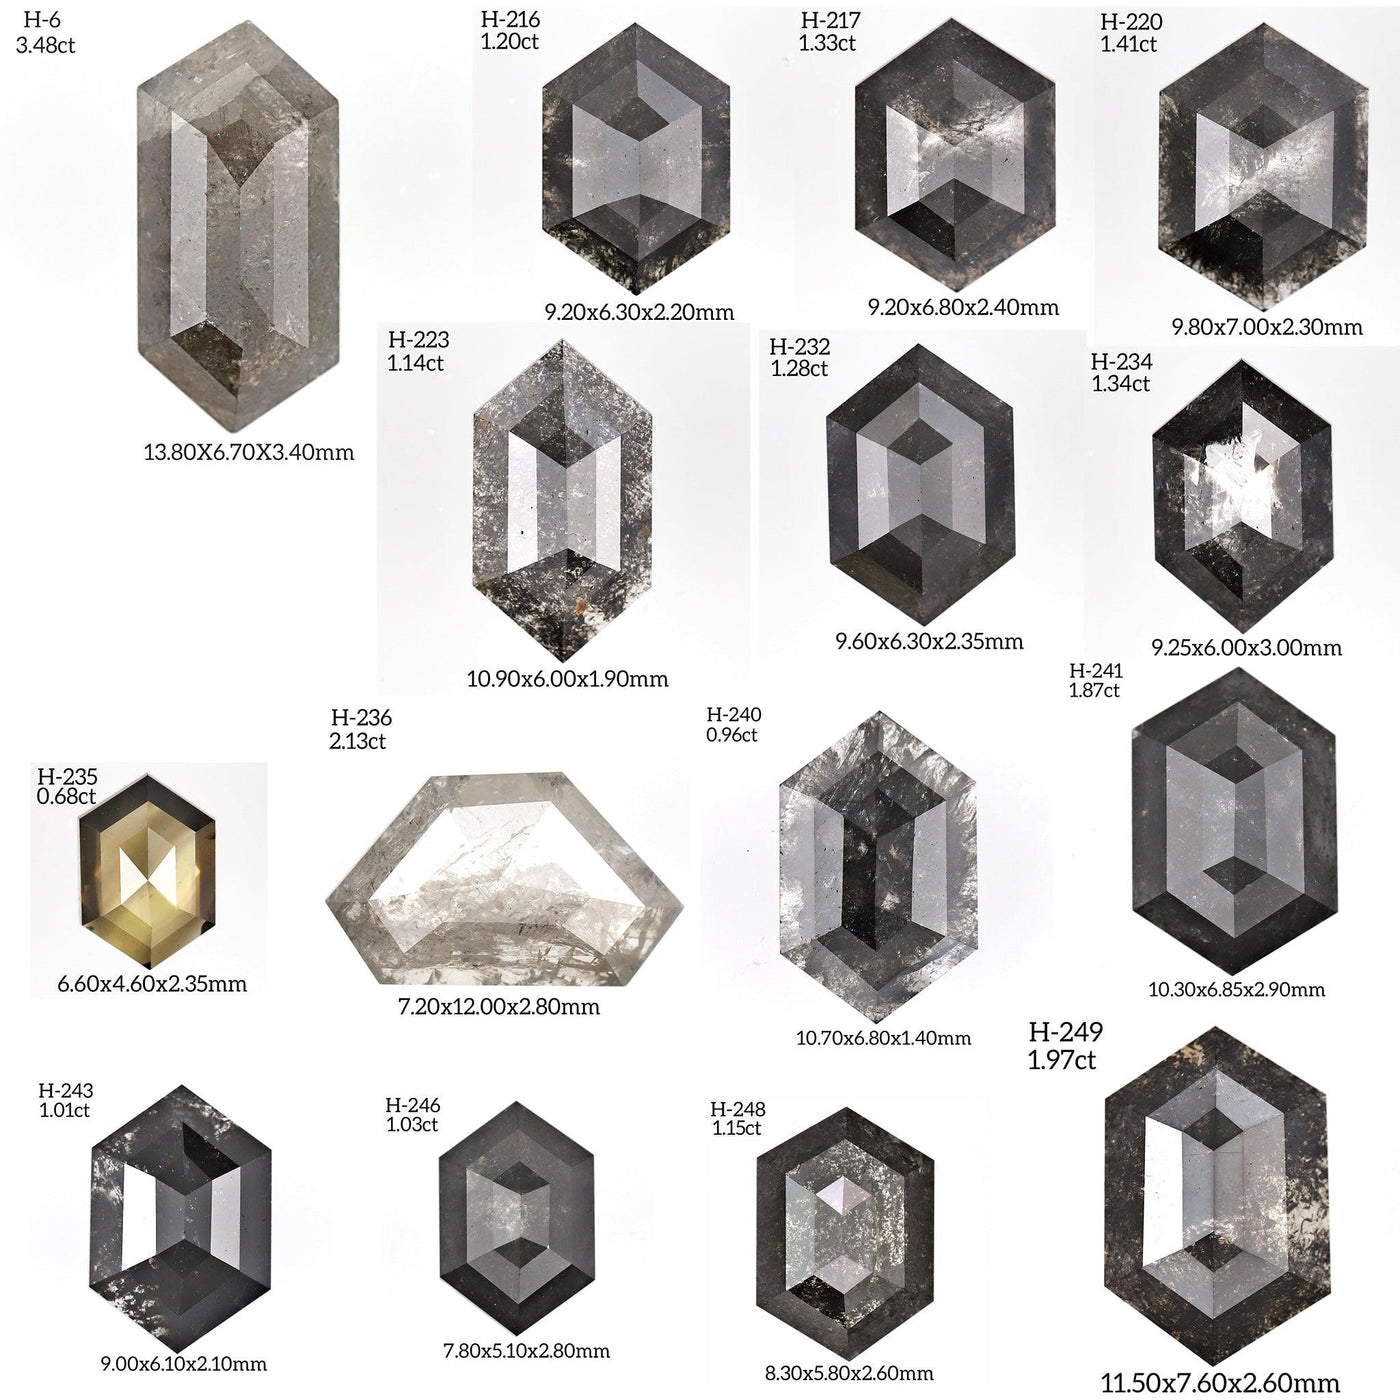 H145 - Salt and pepper hexagon diamond - Rubysta